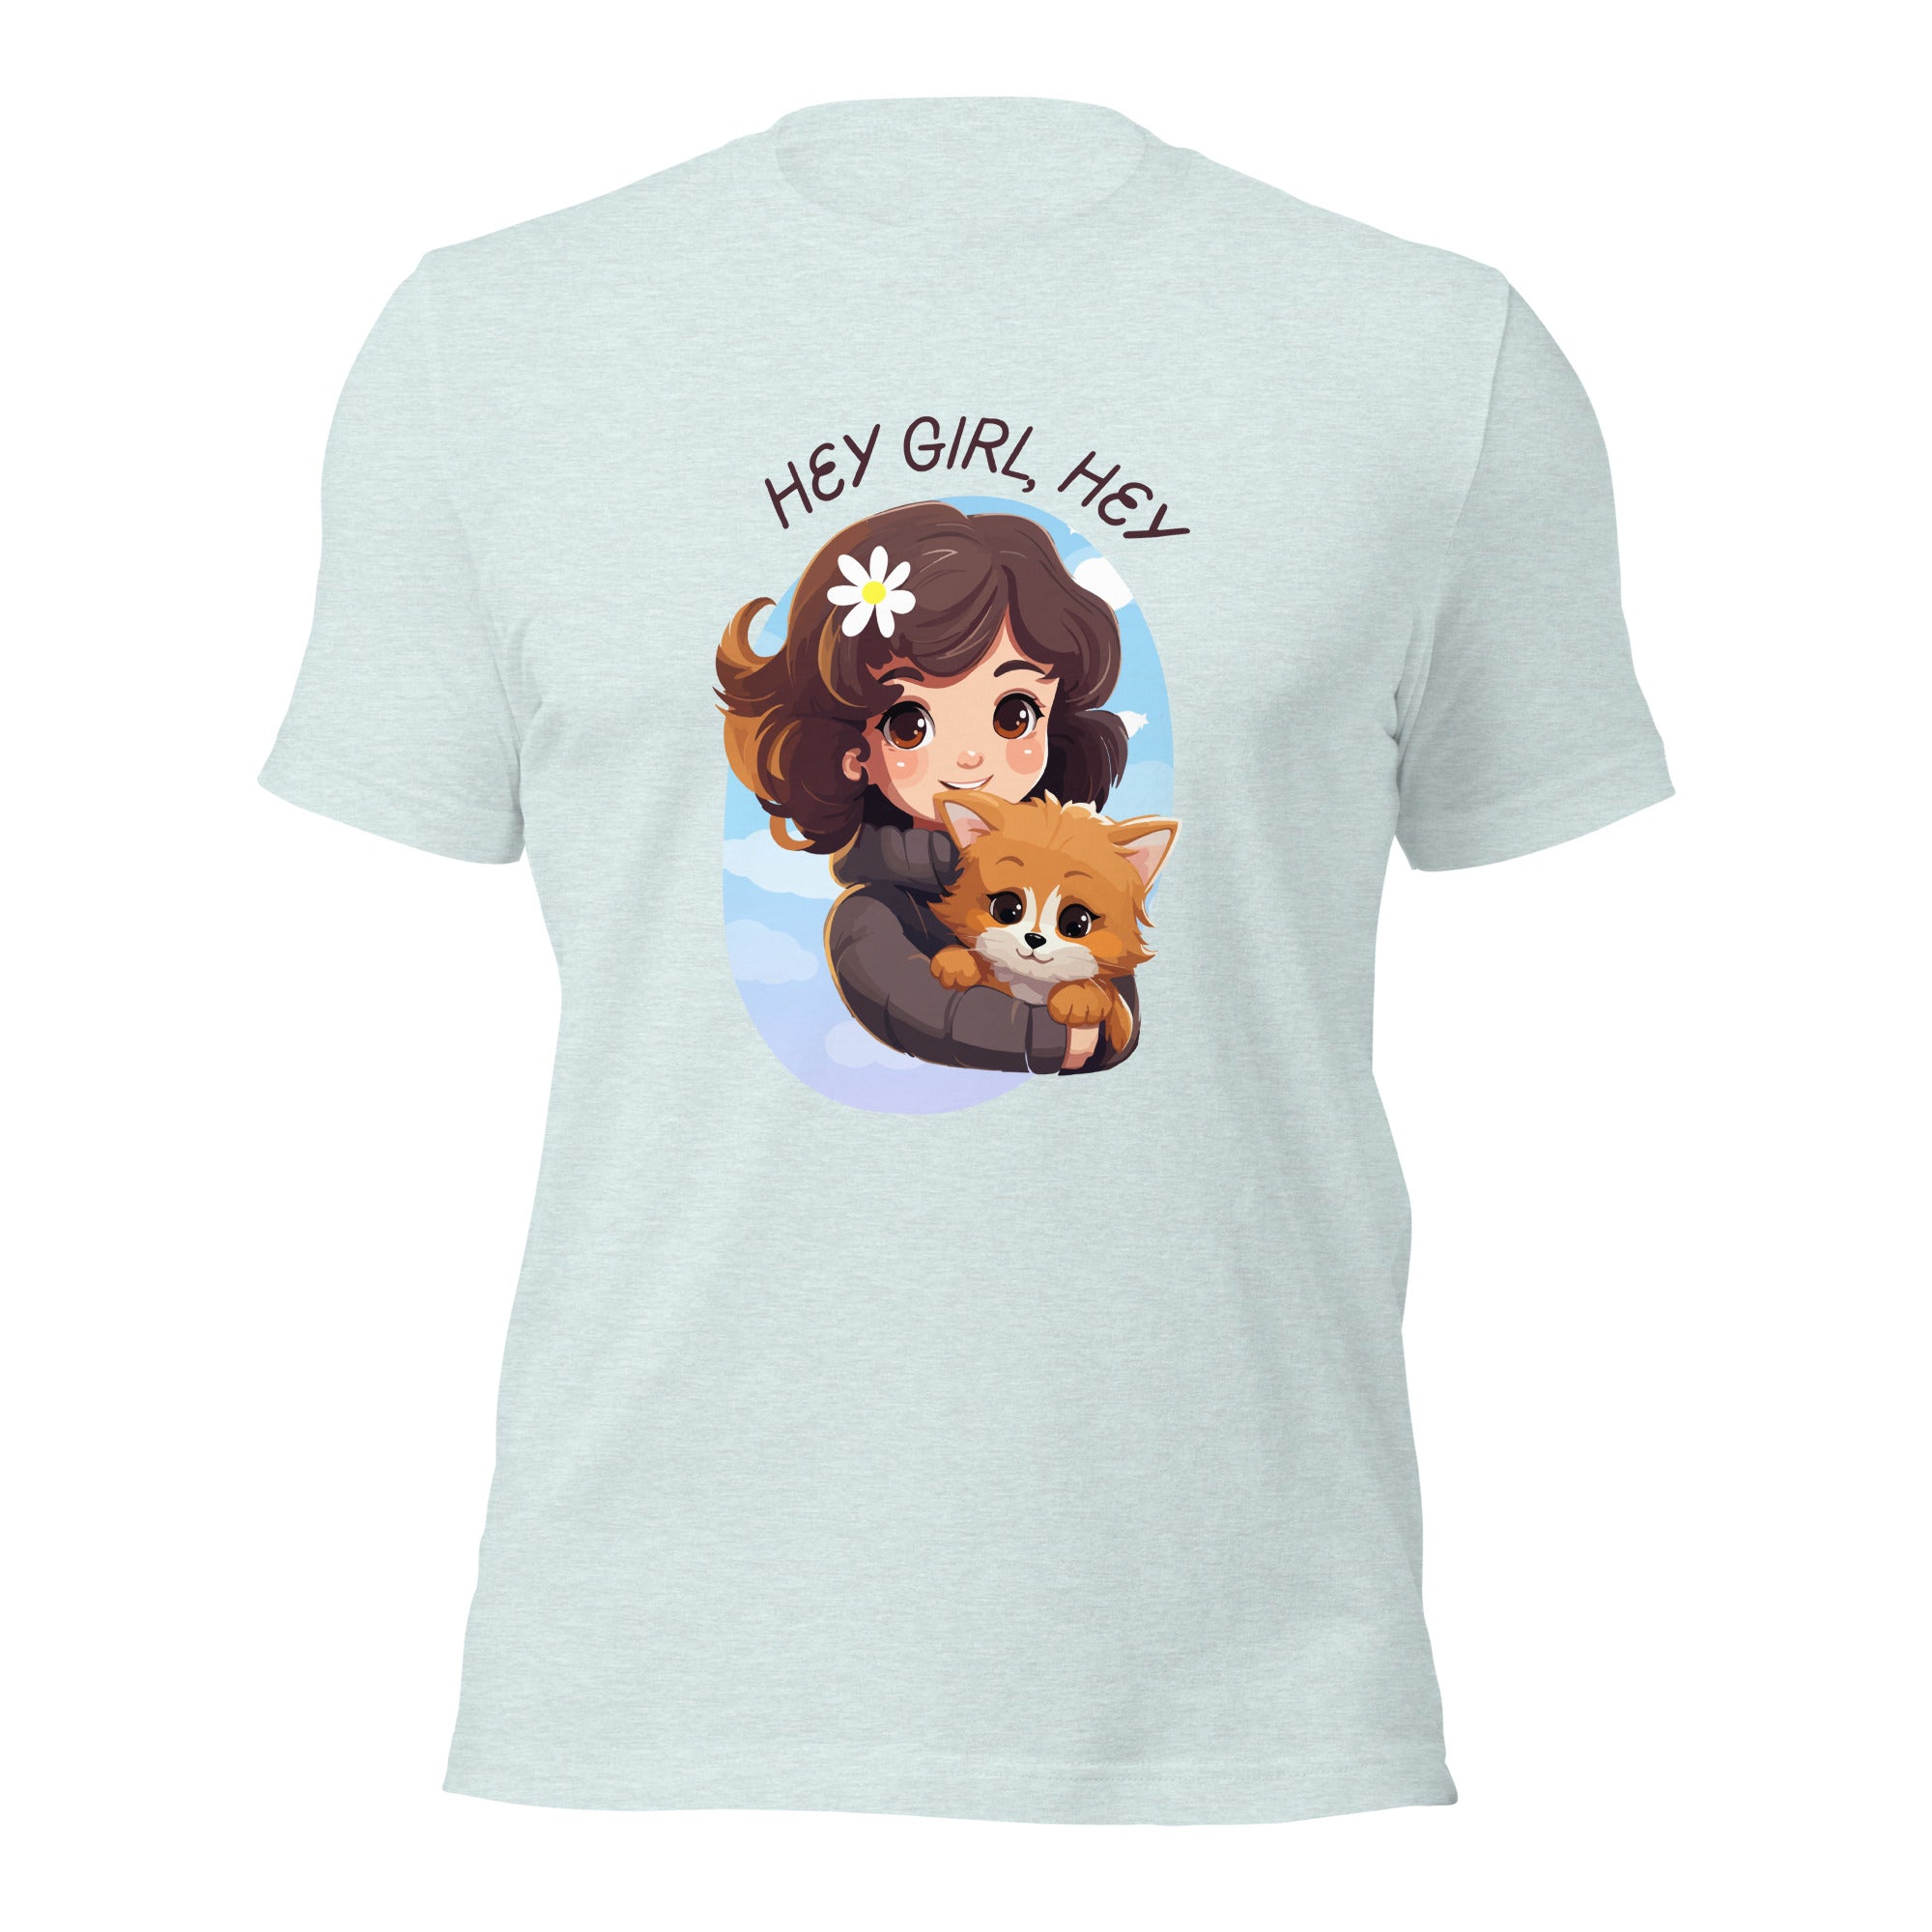 Hey Girl, Hey - Unisex T-shirt